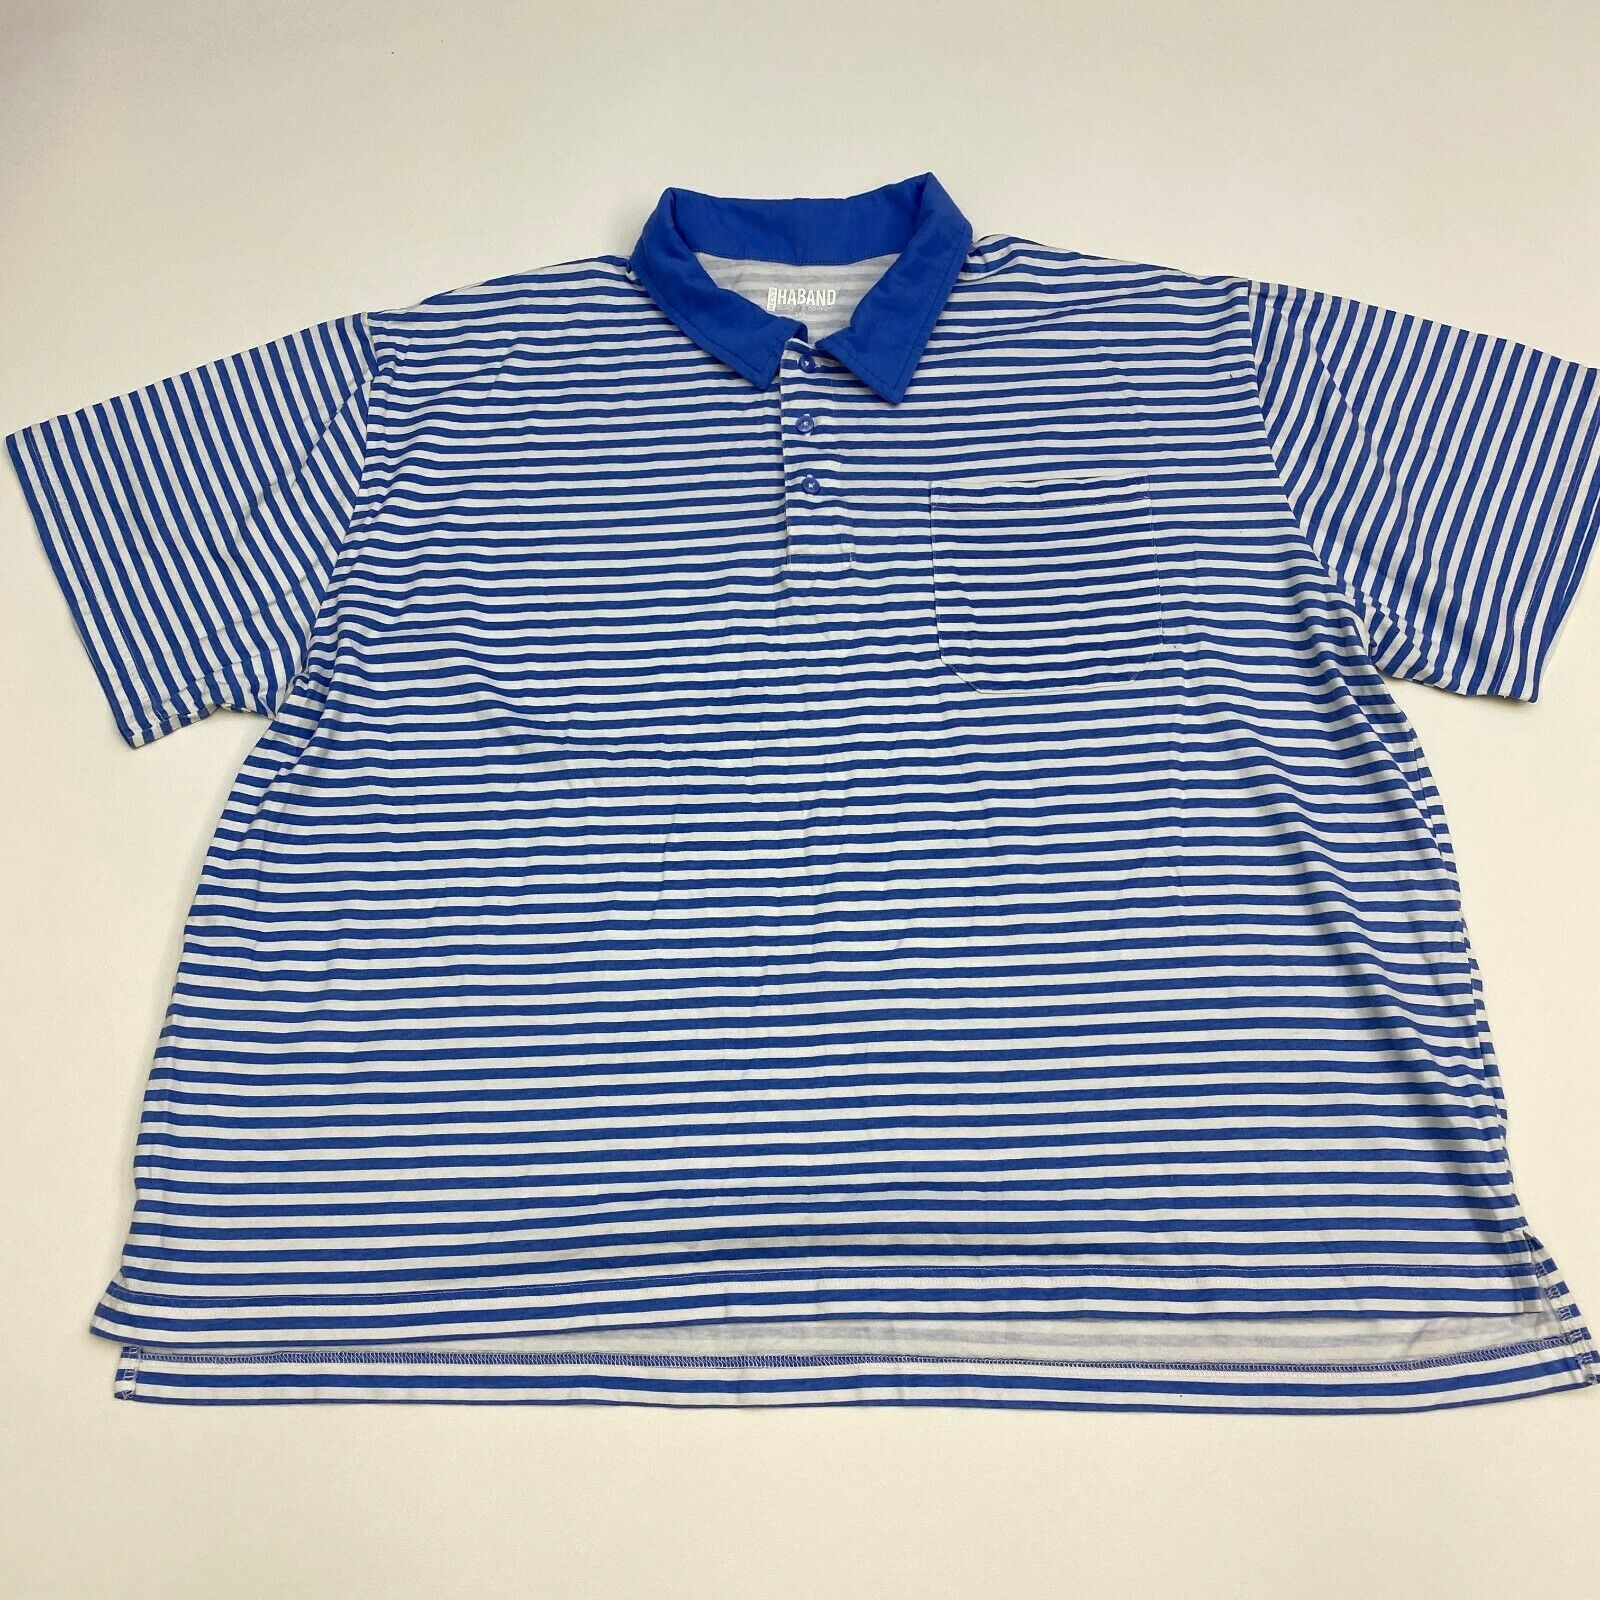 Haband Polo Shirt Mens 3XLl Blue White Stripe Short Sleeve Casual - Polos